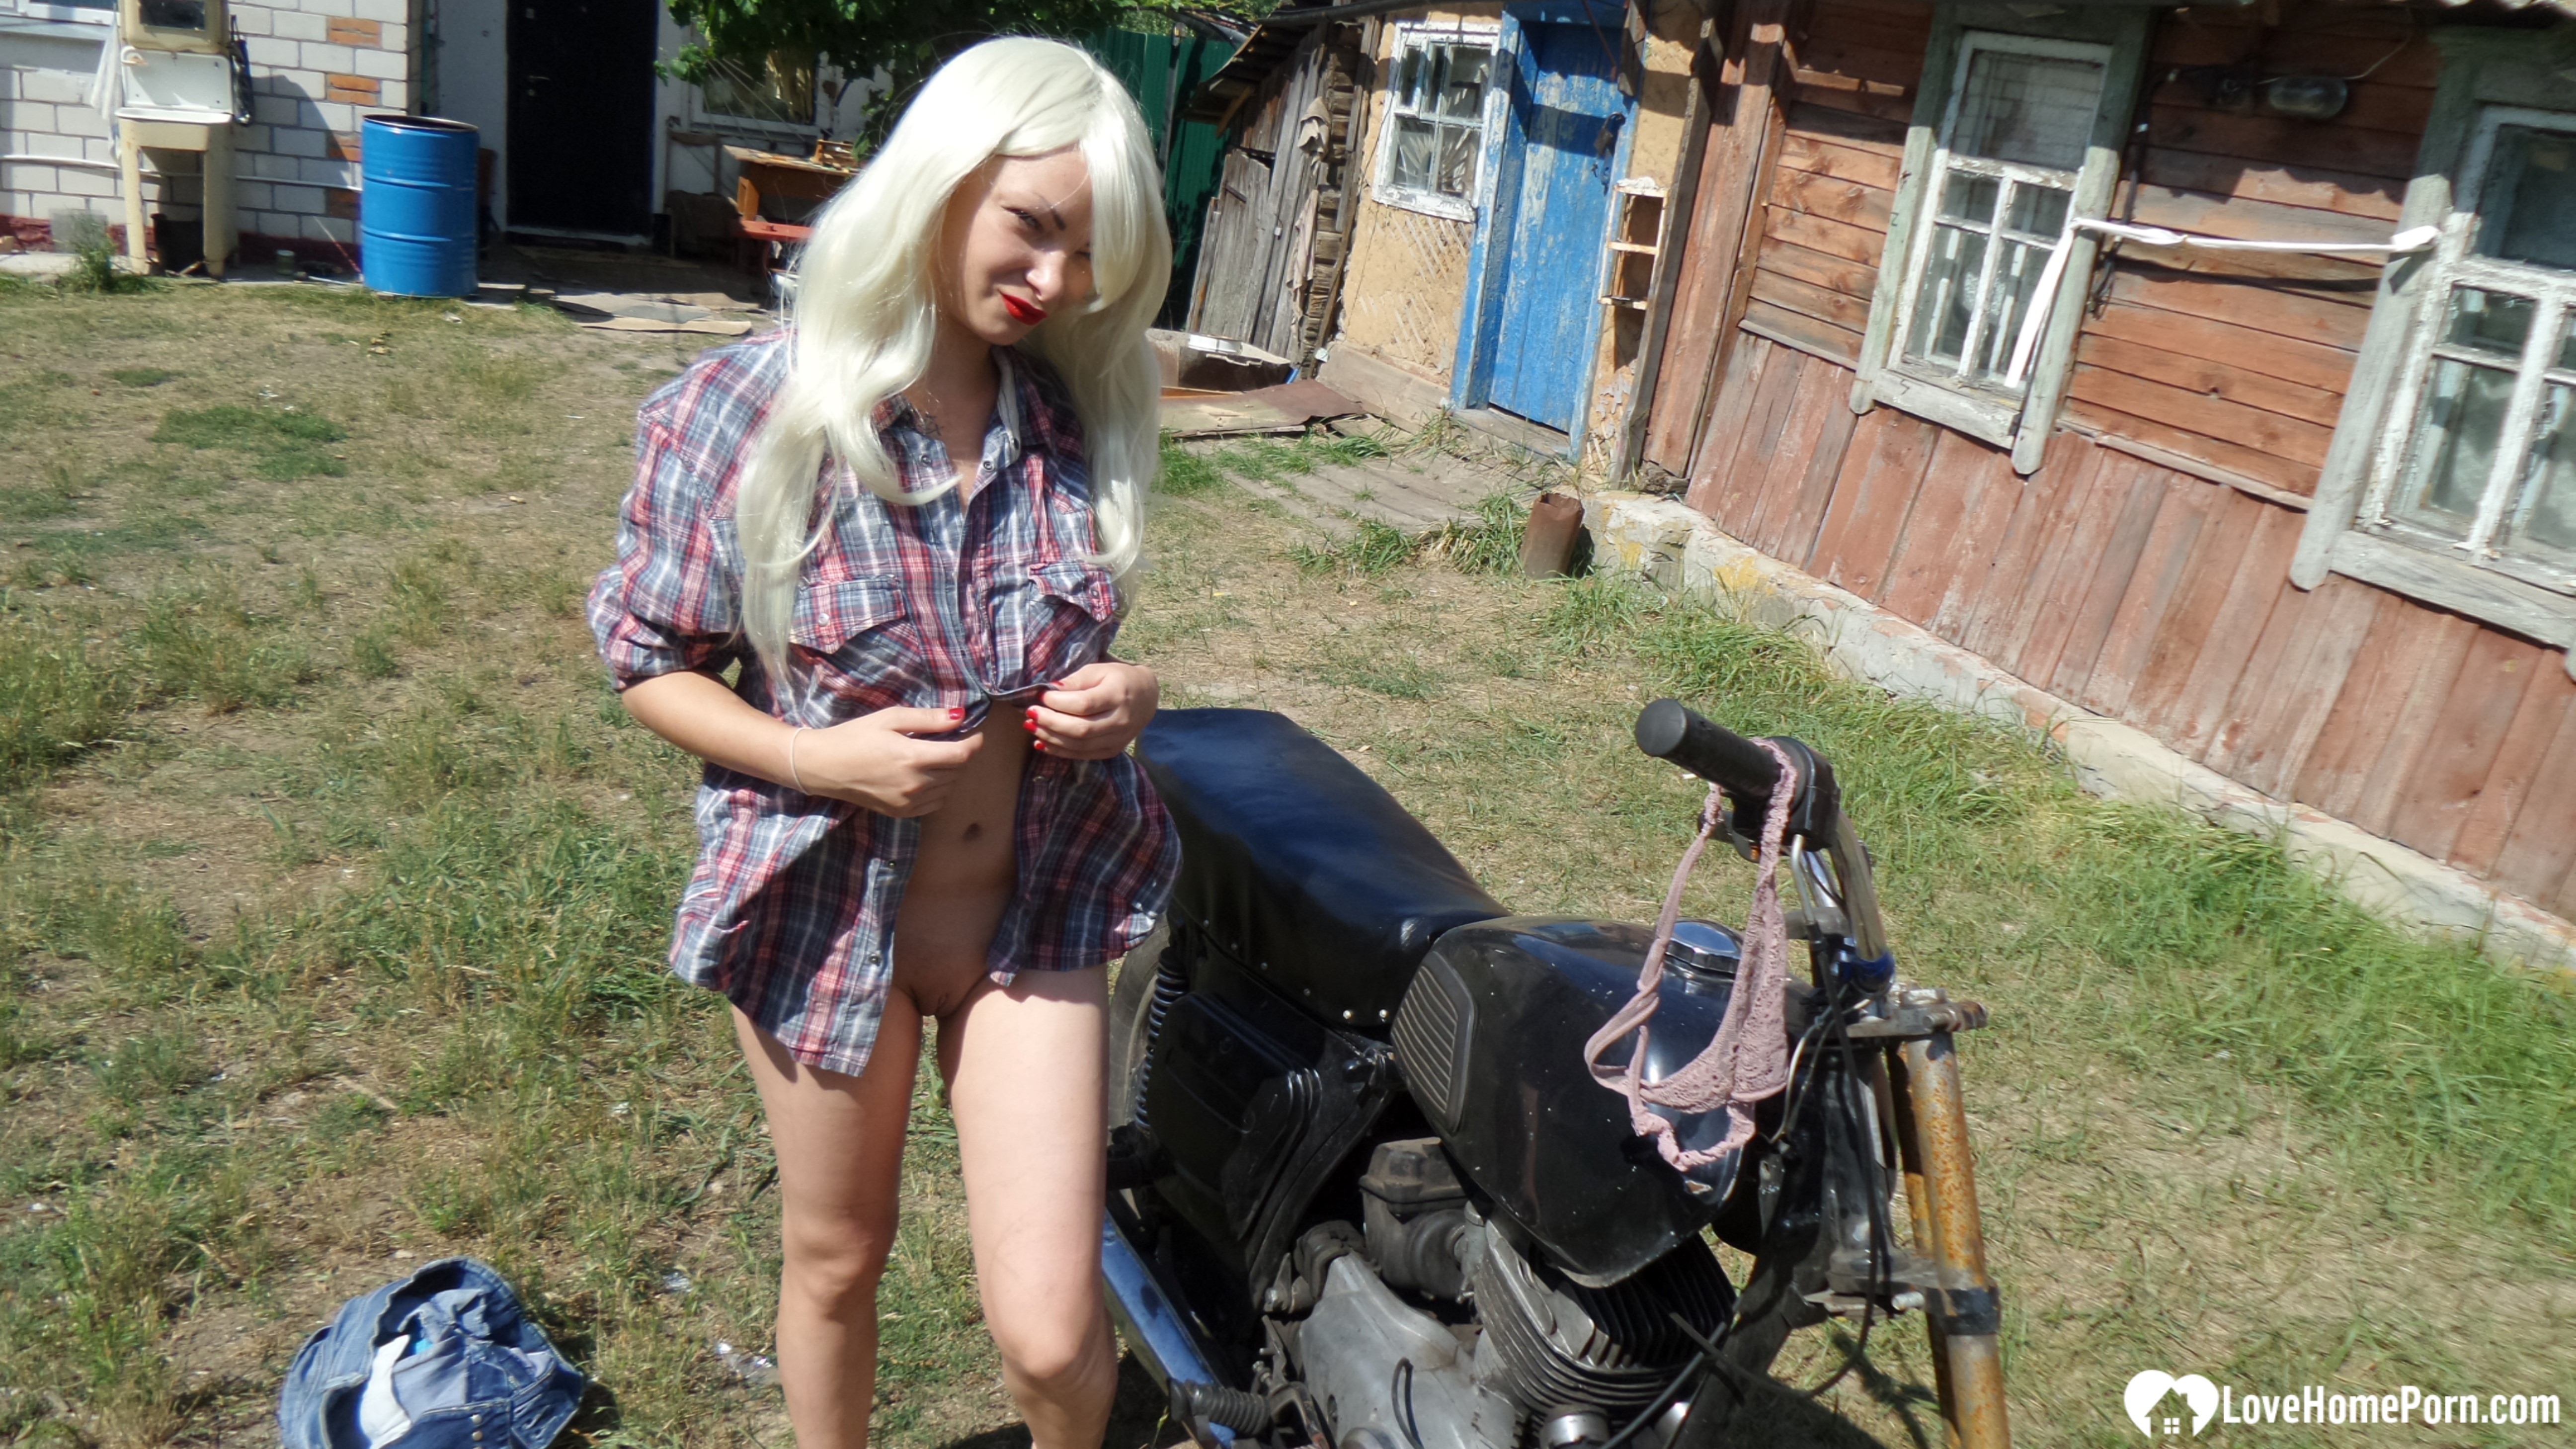 Blonde babe posing naked on a bike